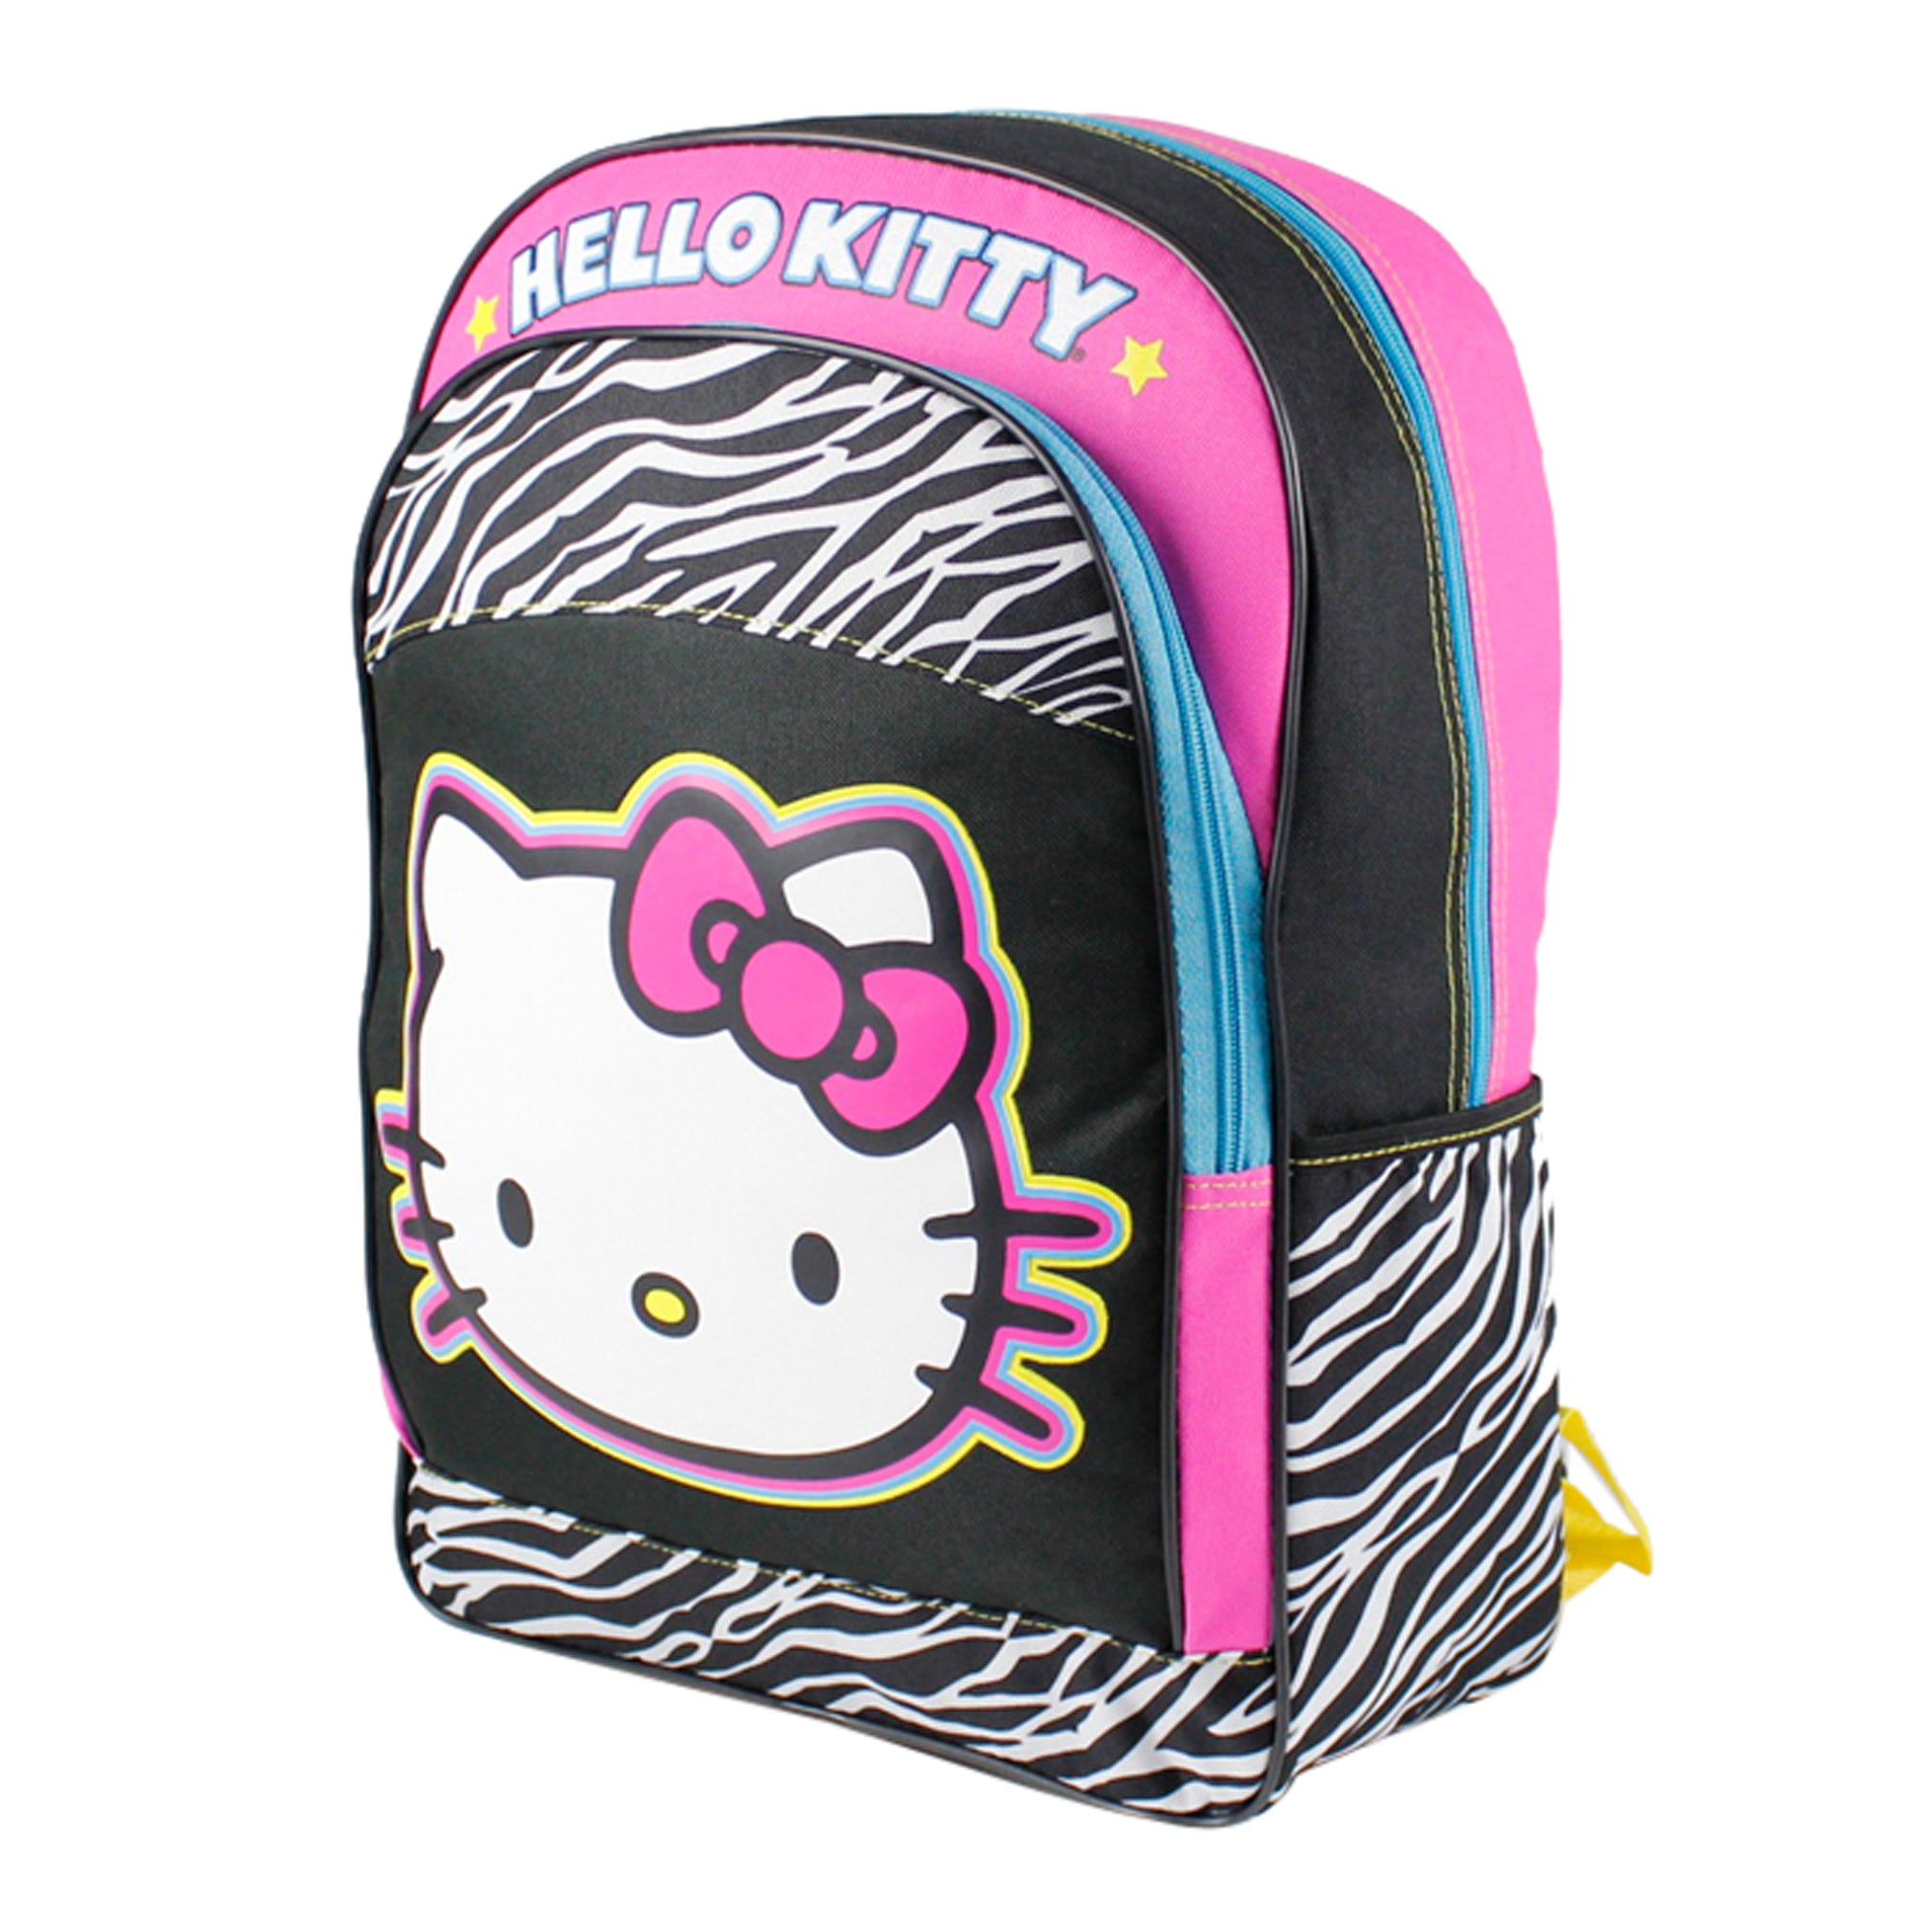 Hello Kitty Sanrio Backpack, Hello Kitty Large Backpack